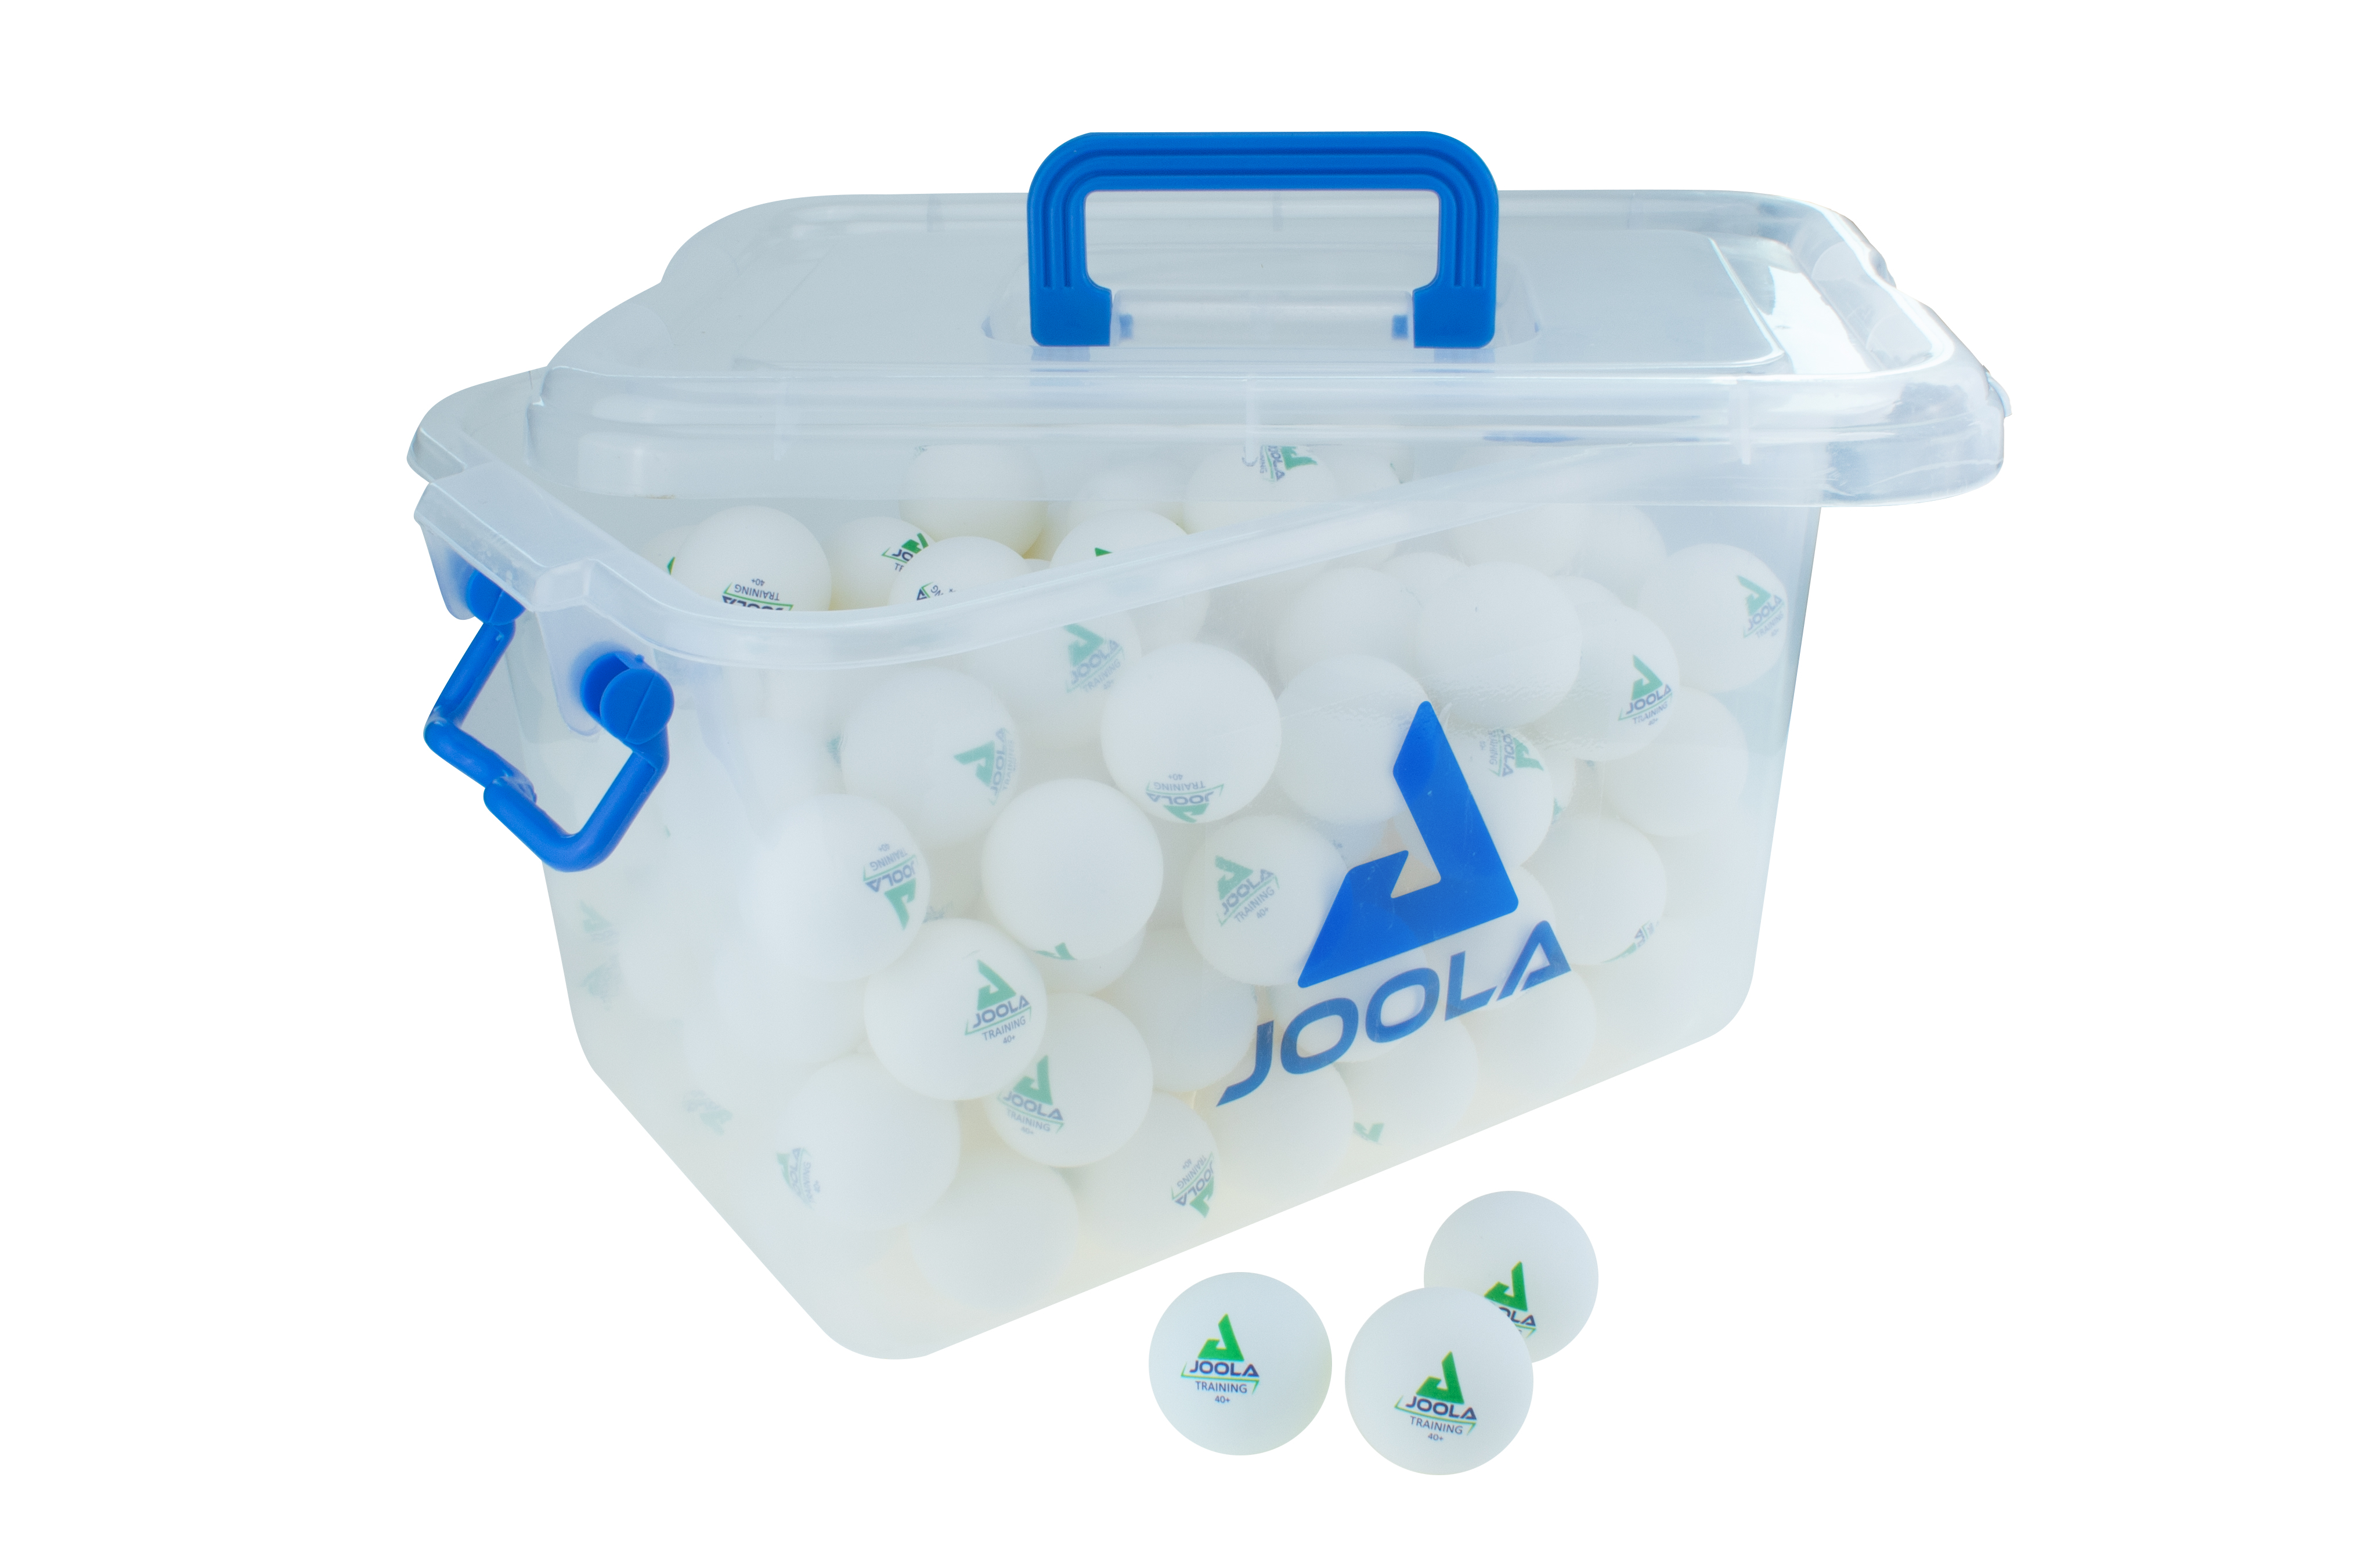 Joola - Trainnig balls 40+ 144 ks Barva: Bílá, Velikost: 40+